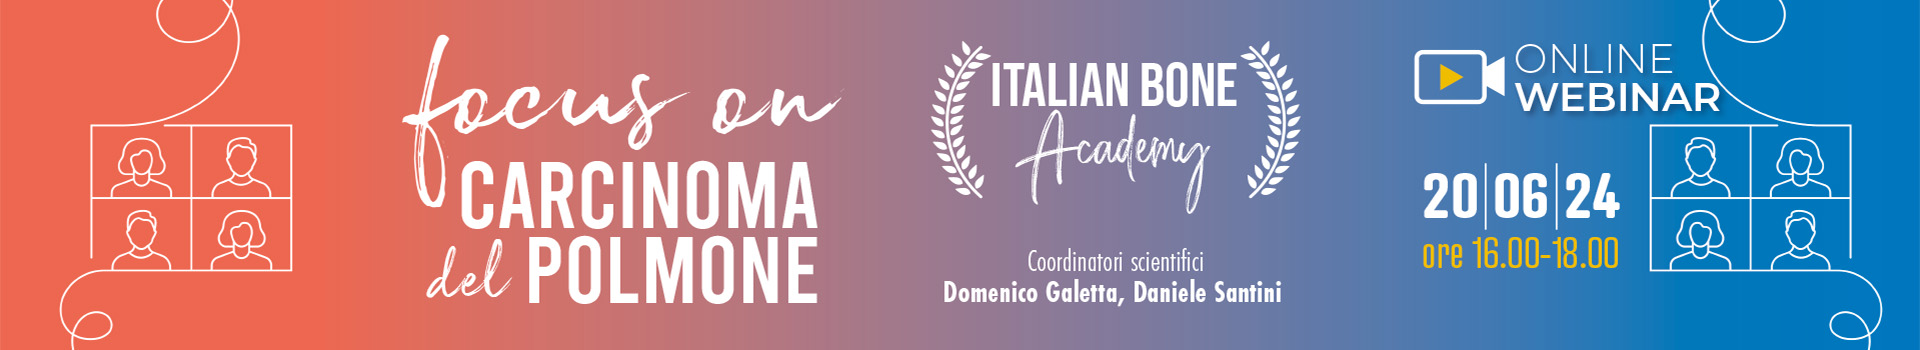 Italian Bone Academy: FOCUS ON CARCINOMA DEL POLMONE